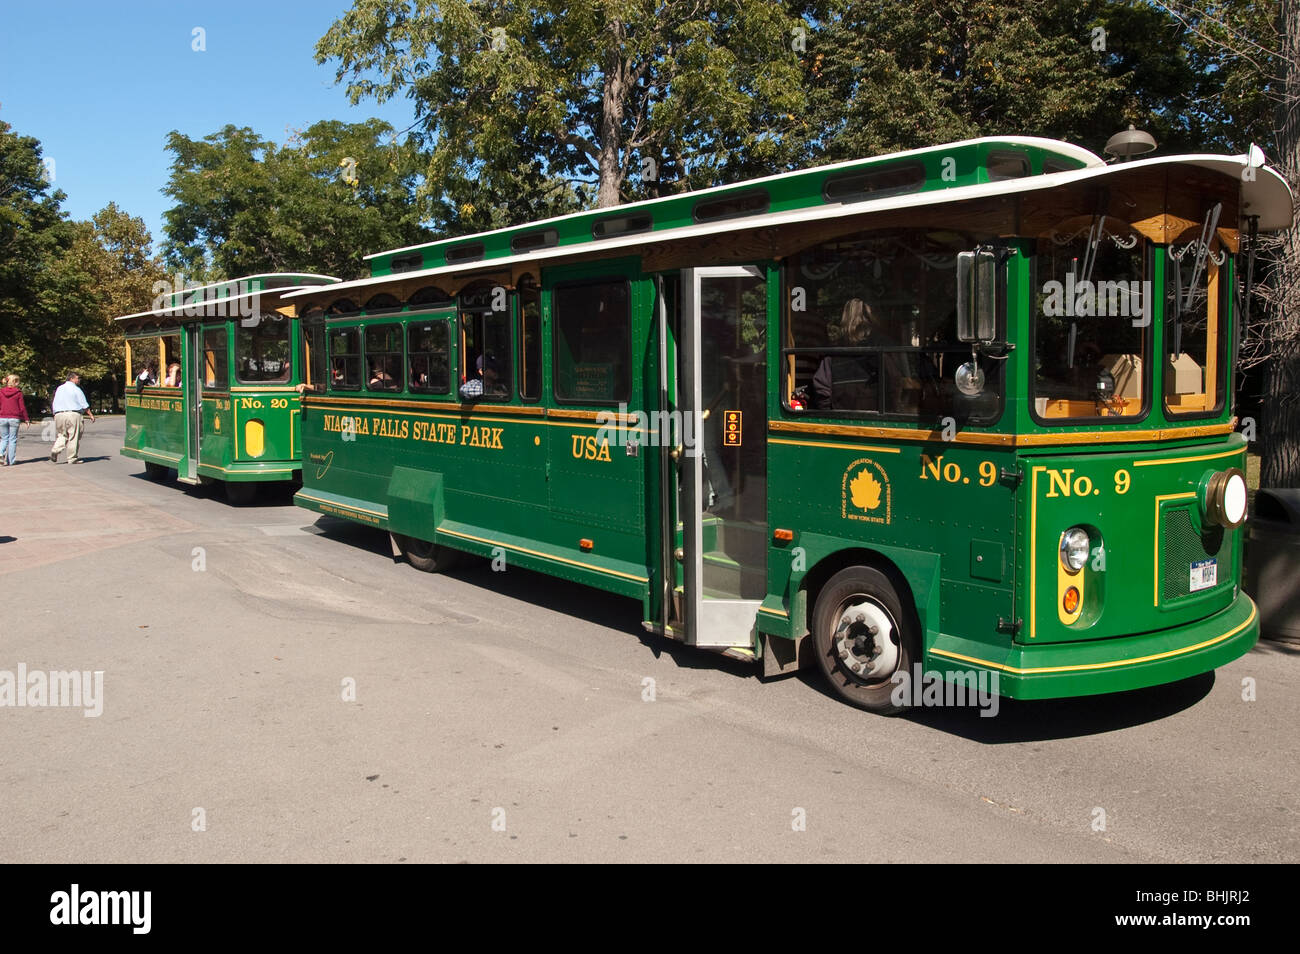 Niagara Falls State Park green Scenic Trolley, NY, USA Stock Photo - Alamy